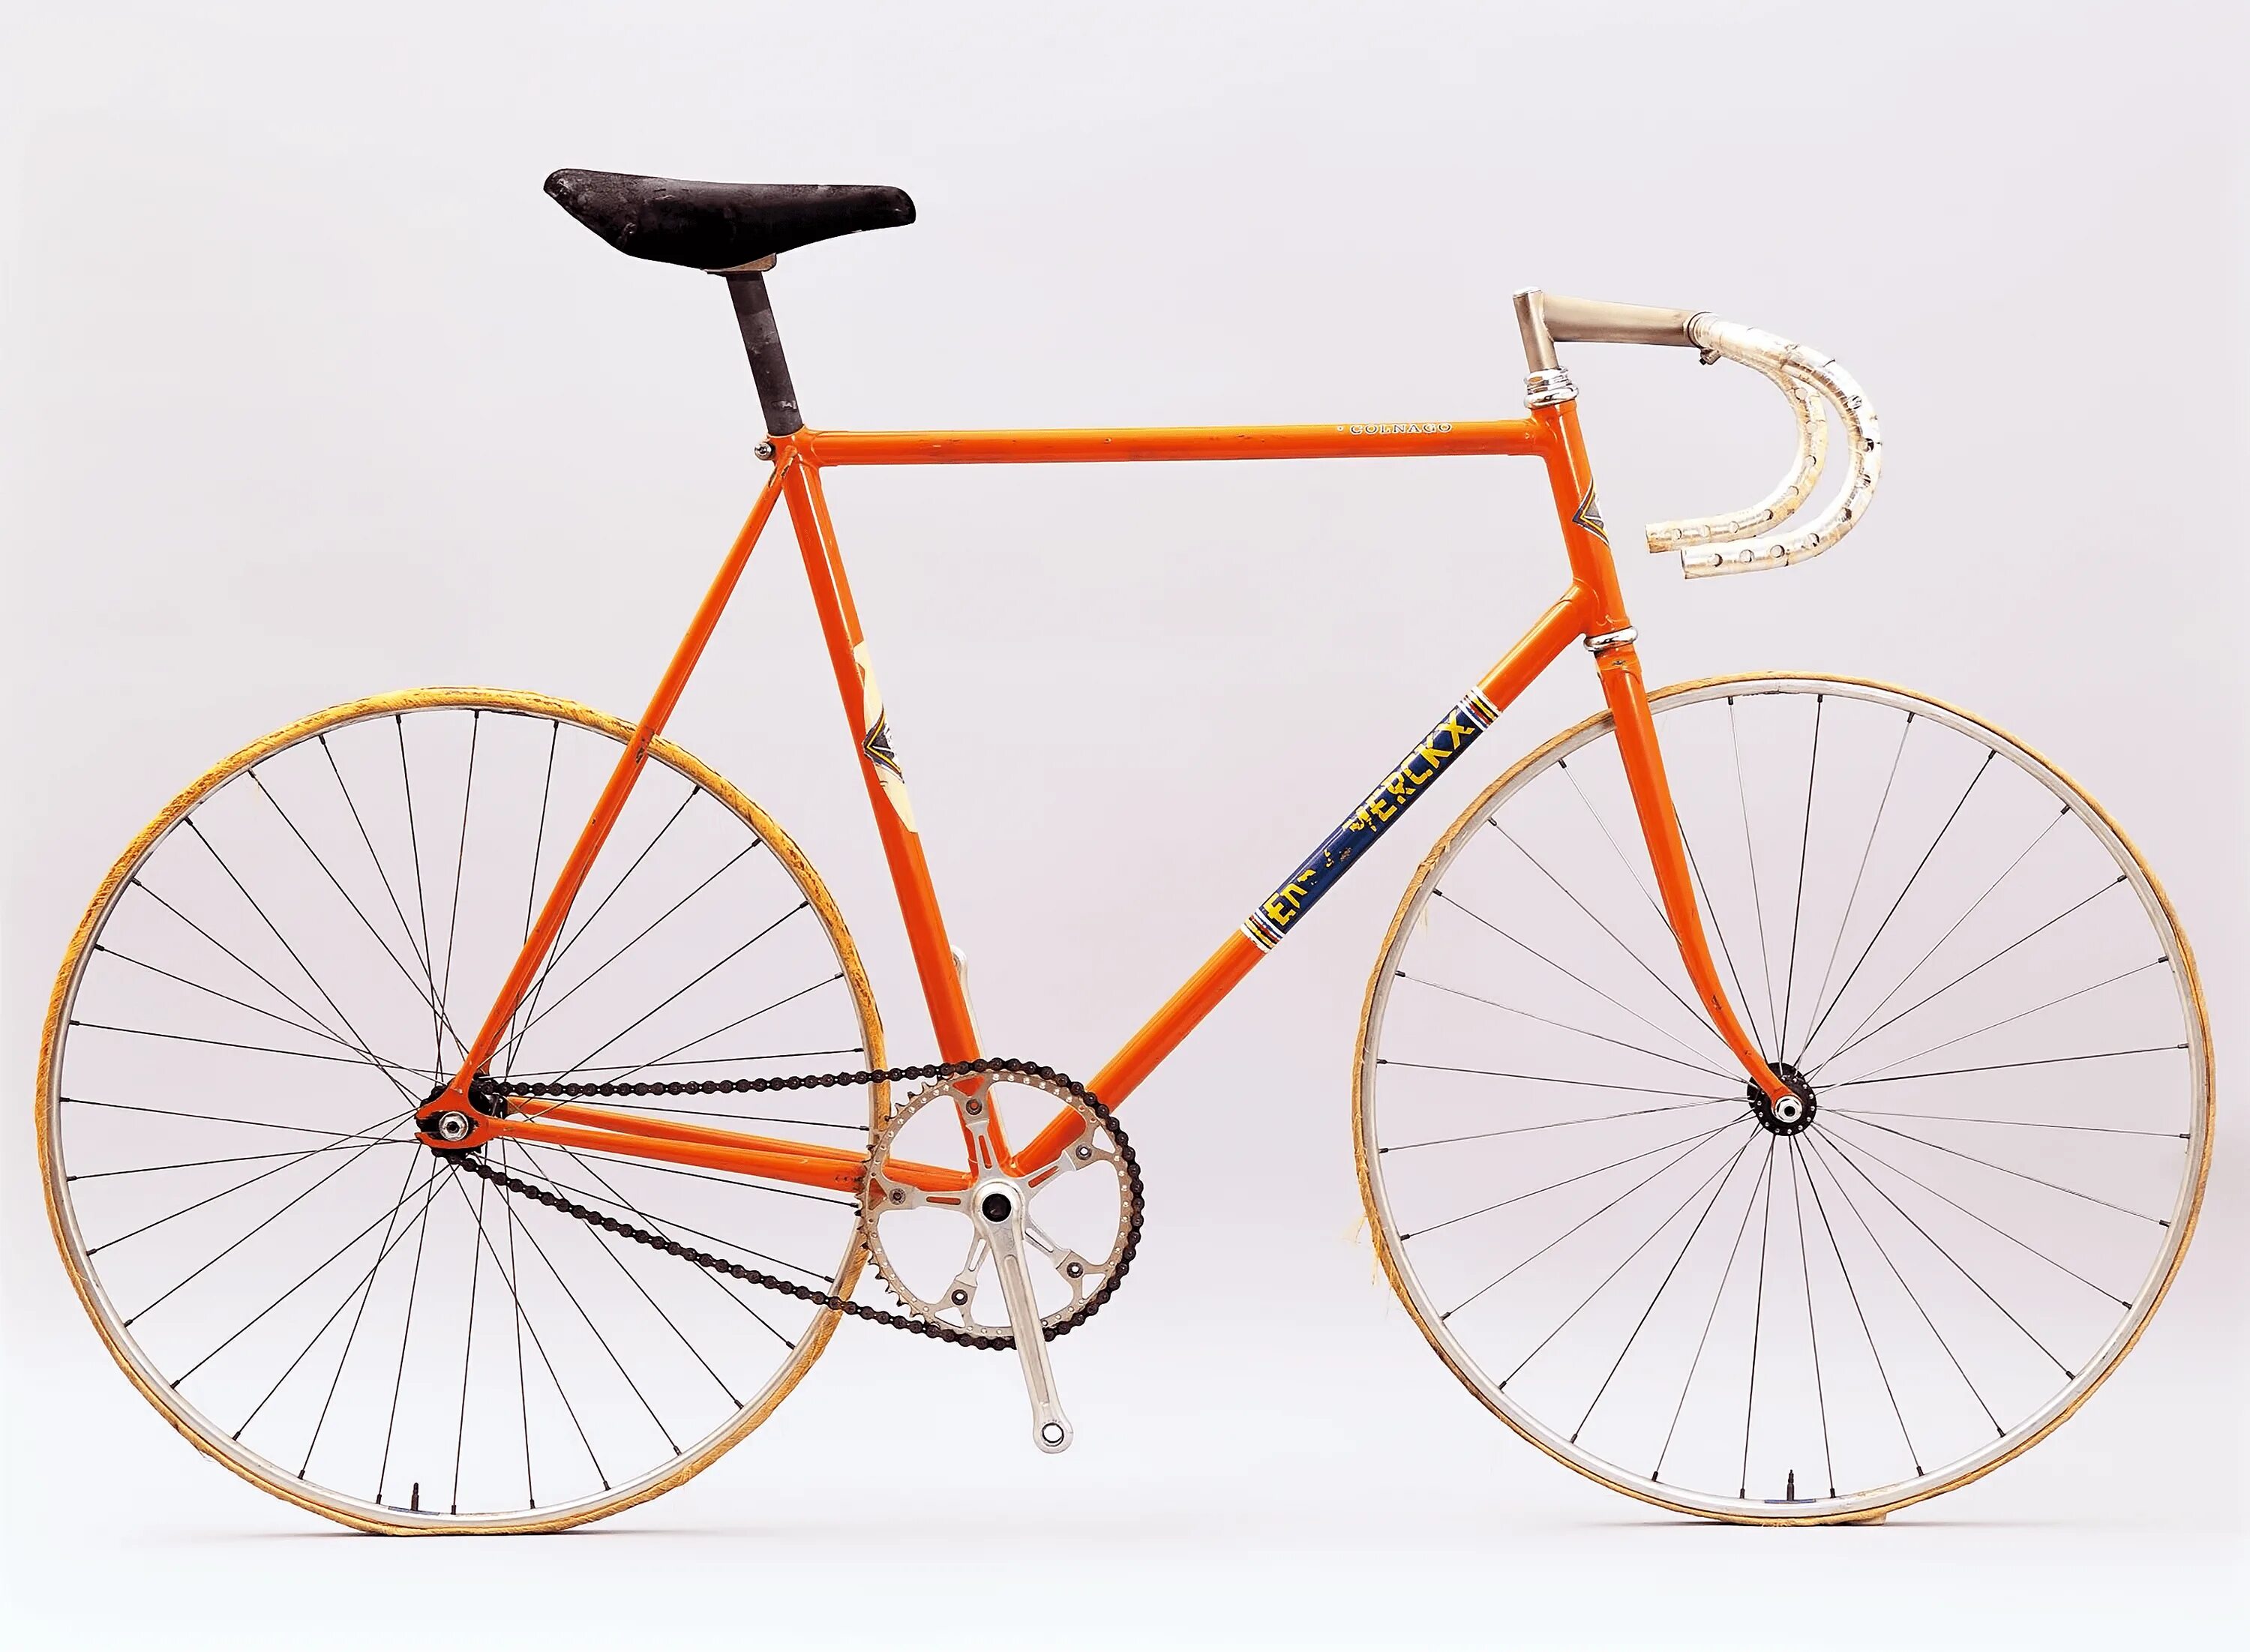 Colnago велосипеды. Eddy Merckx велосипеды. Трековый велосипед Colnago. Colnago велосипеды ретро. Велосипед Eddy Merckx карбон.